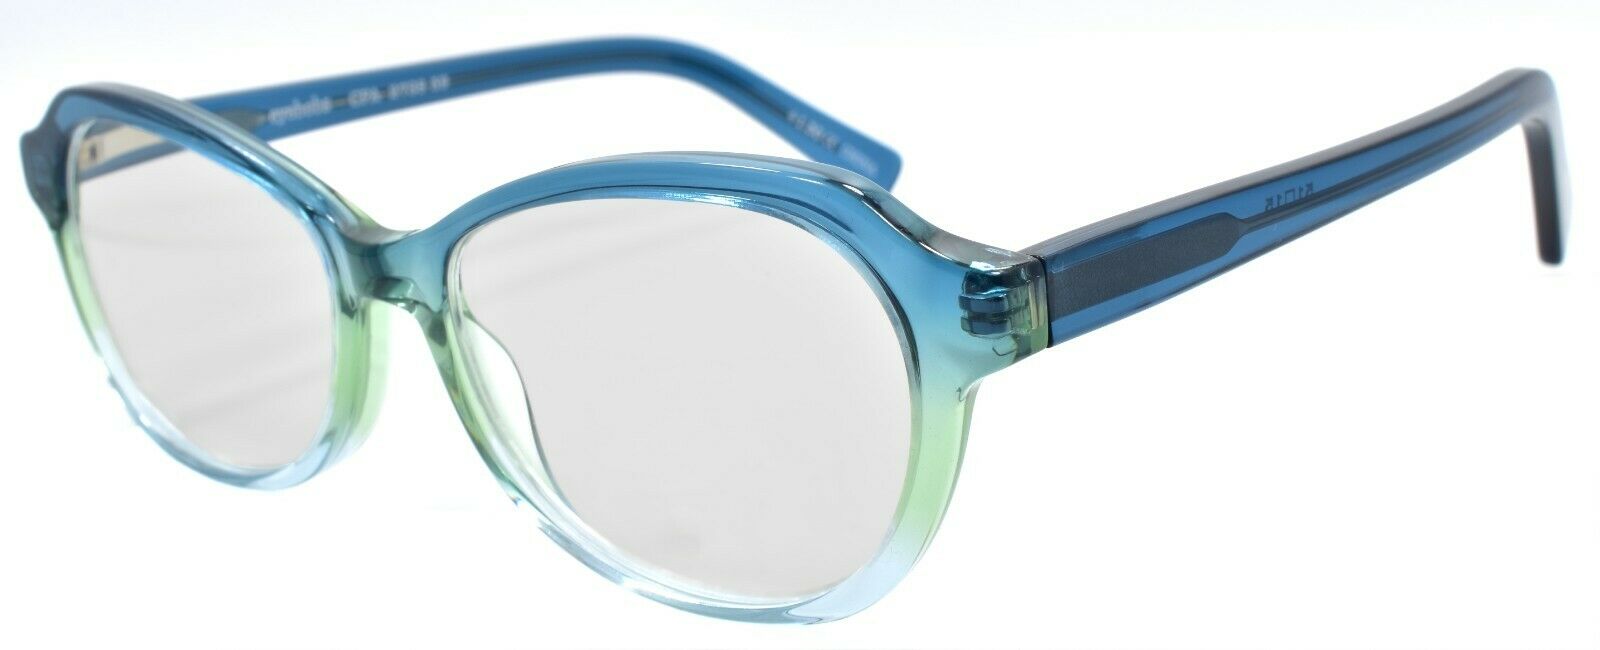 1-Eyebobs CPA 2738 59 Women's Reading Glasses Blue Green Gradient +1.50-842754154451-IKSpecs